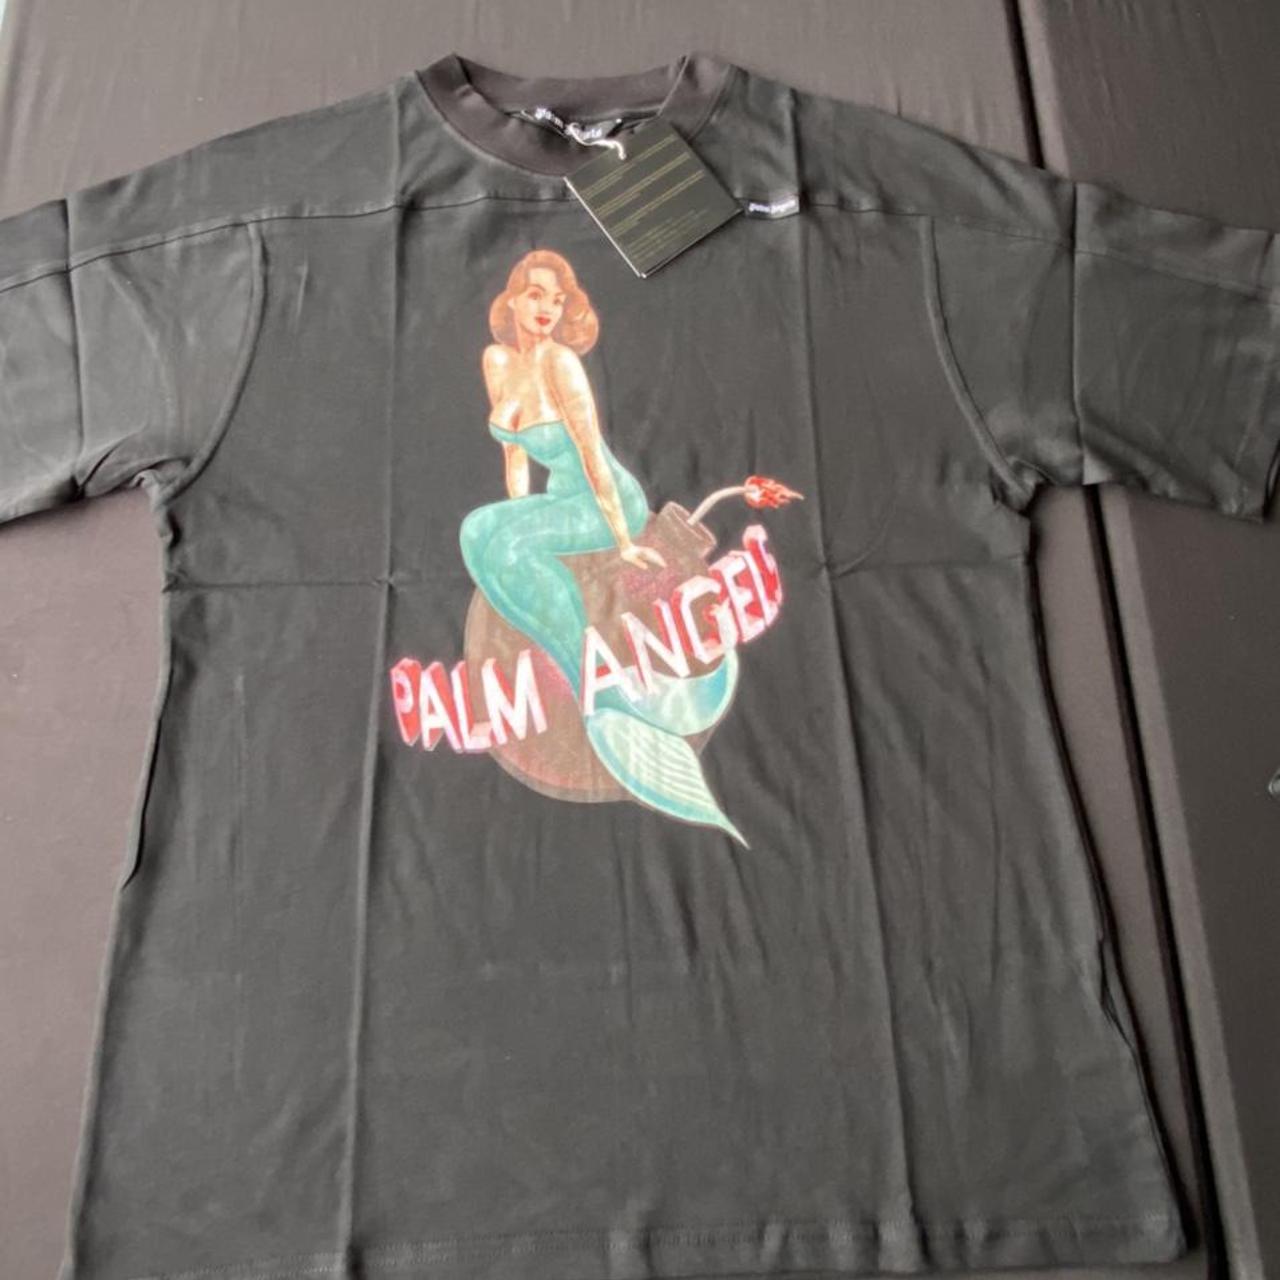 Product Image 1 - Palm Angels Shirt
Authentic
Tags
Medium

#PalmAngels #Black #Mermaid